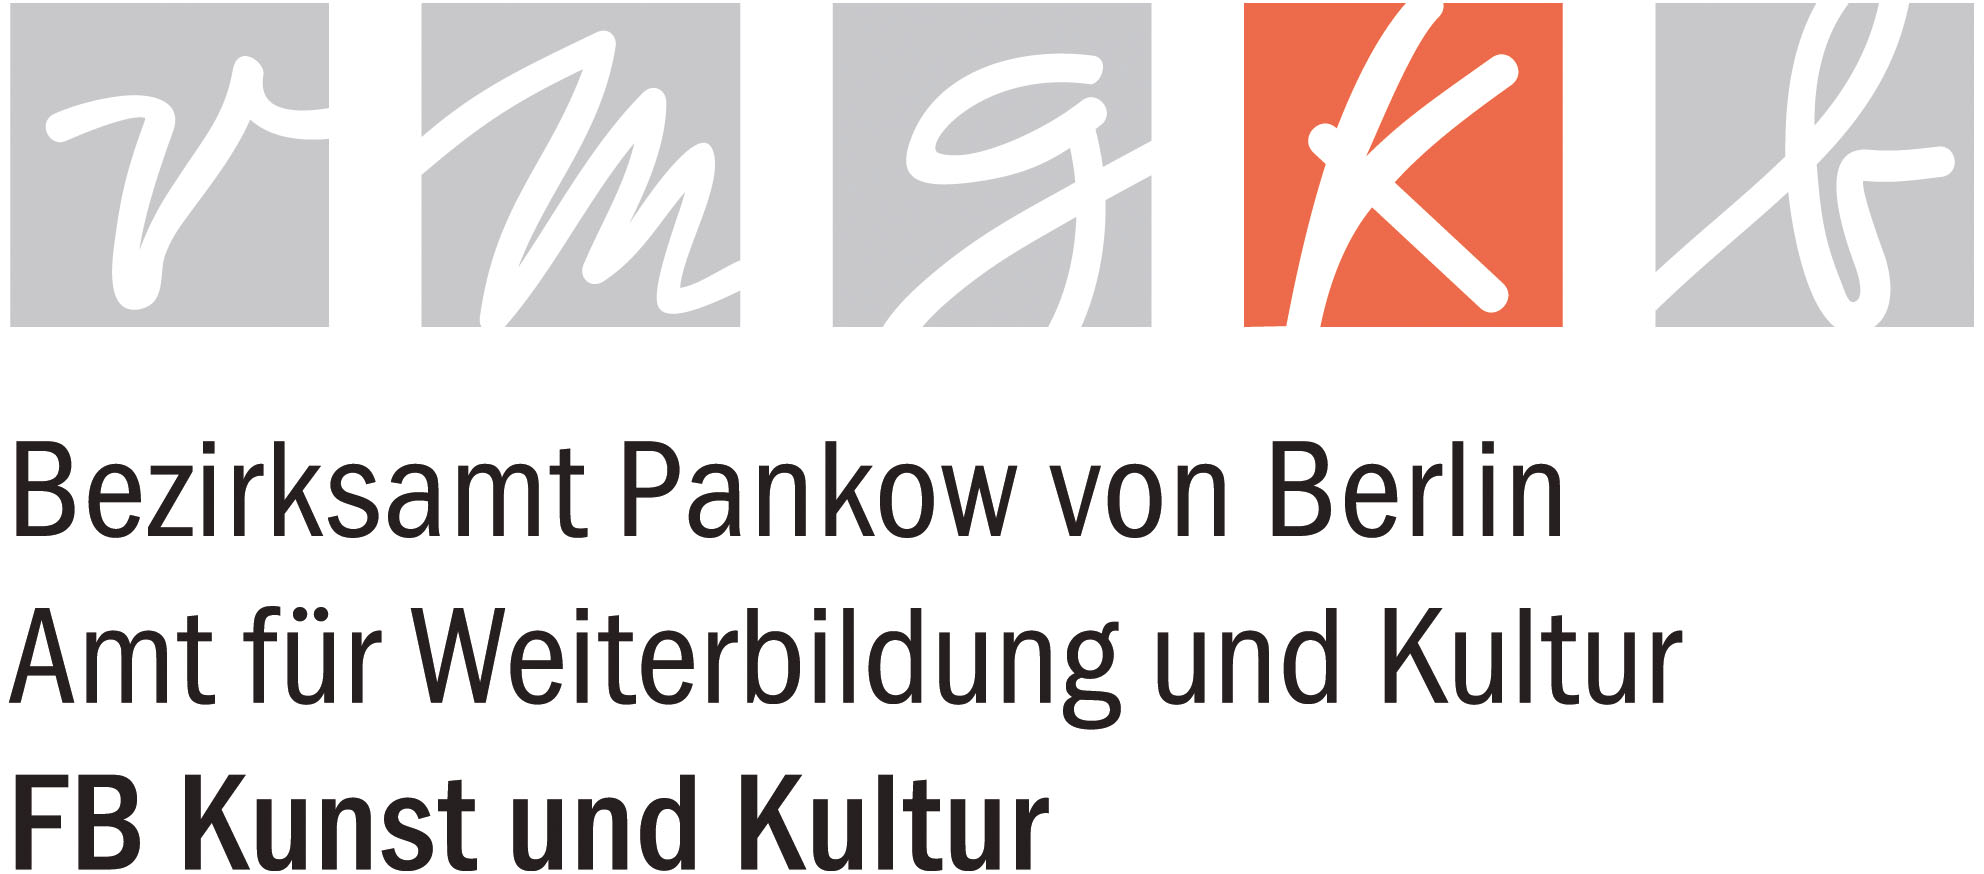 Bezirksamt Pankow - FB Kunst und Kultur